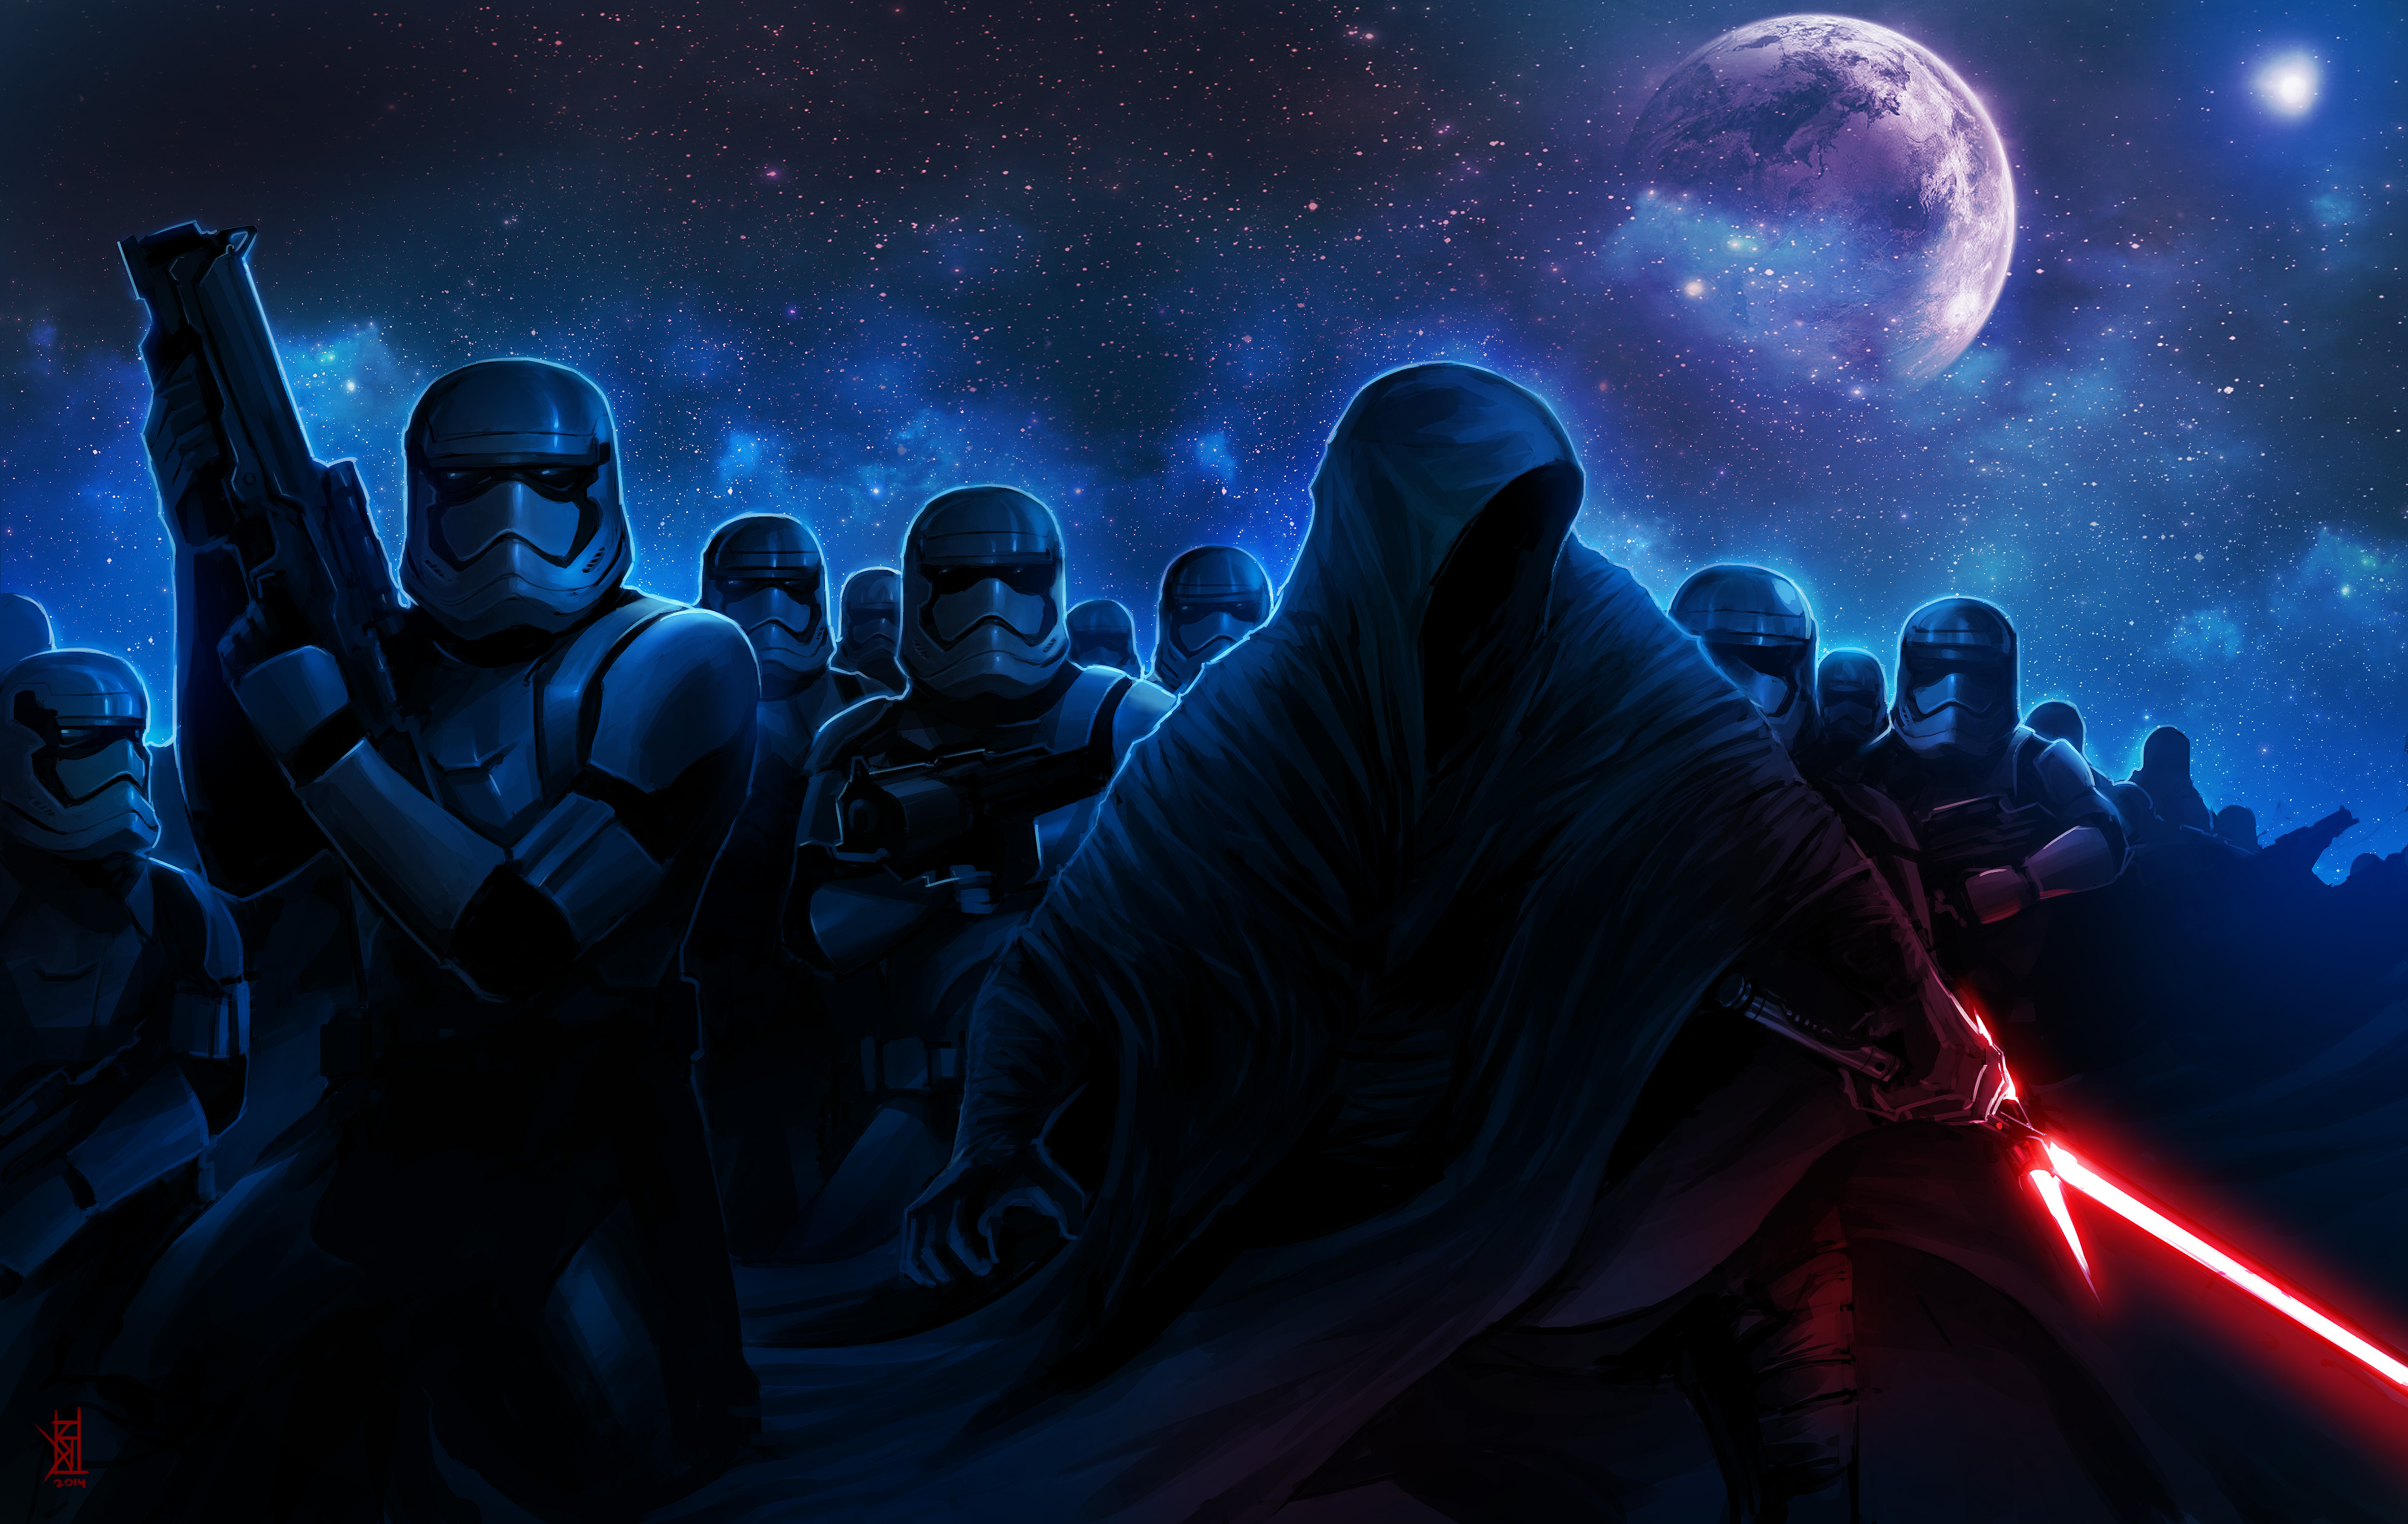 stormtrooper, movie, star wars episode vii: the force awakens, kylo ren, lightsaber, star wars phone background